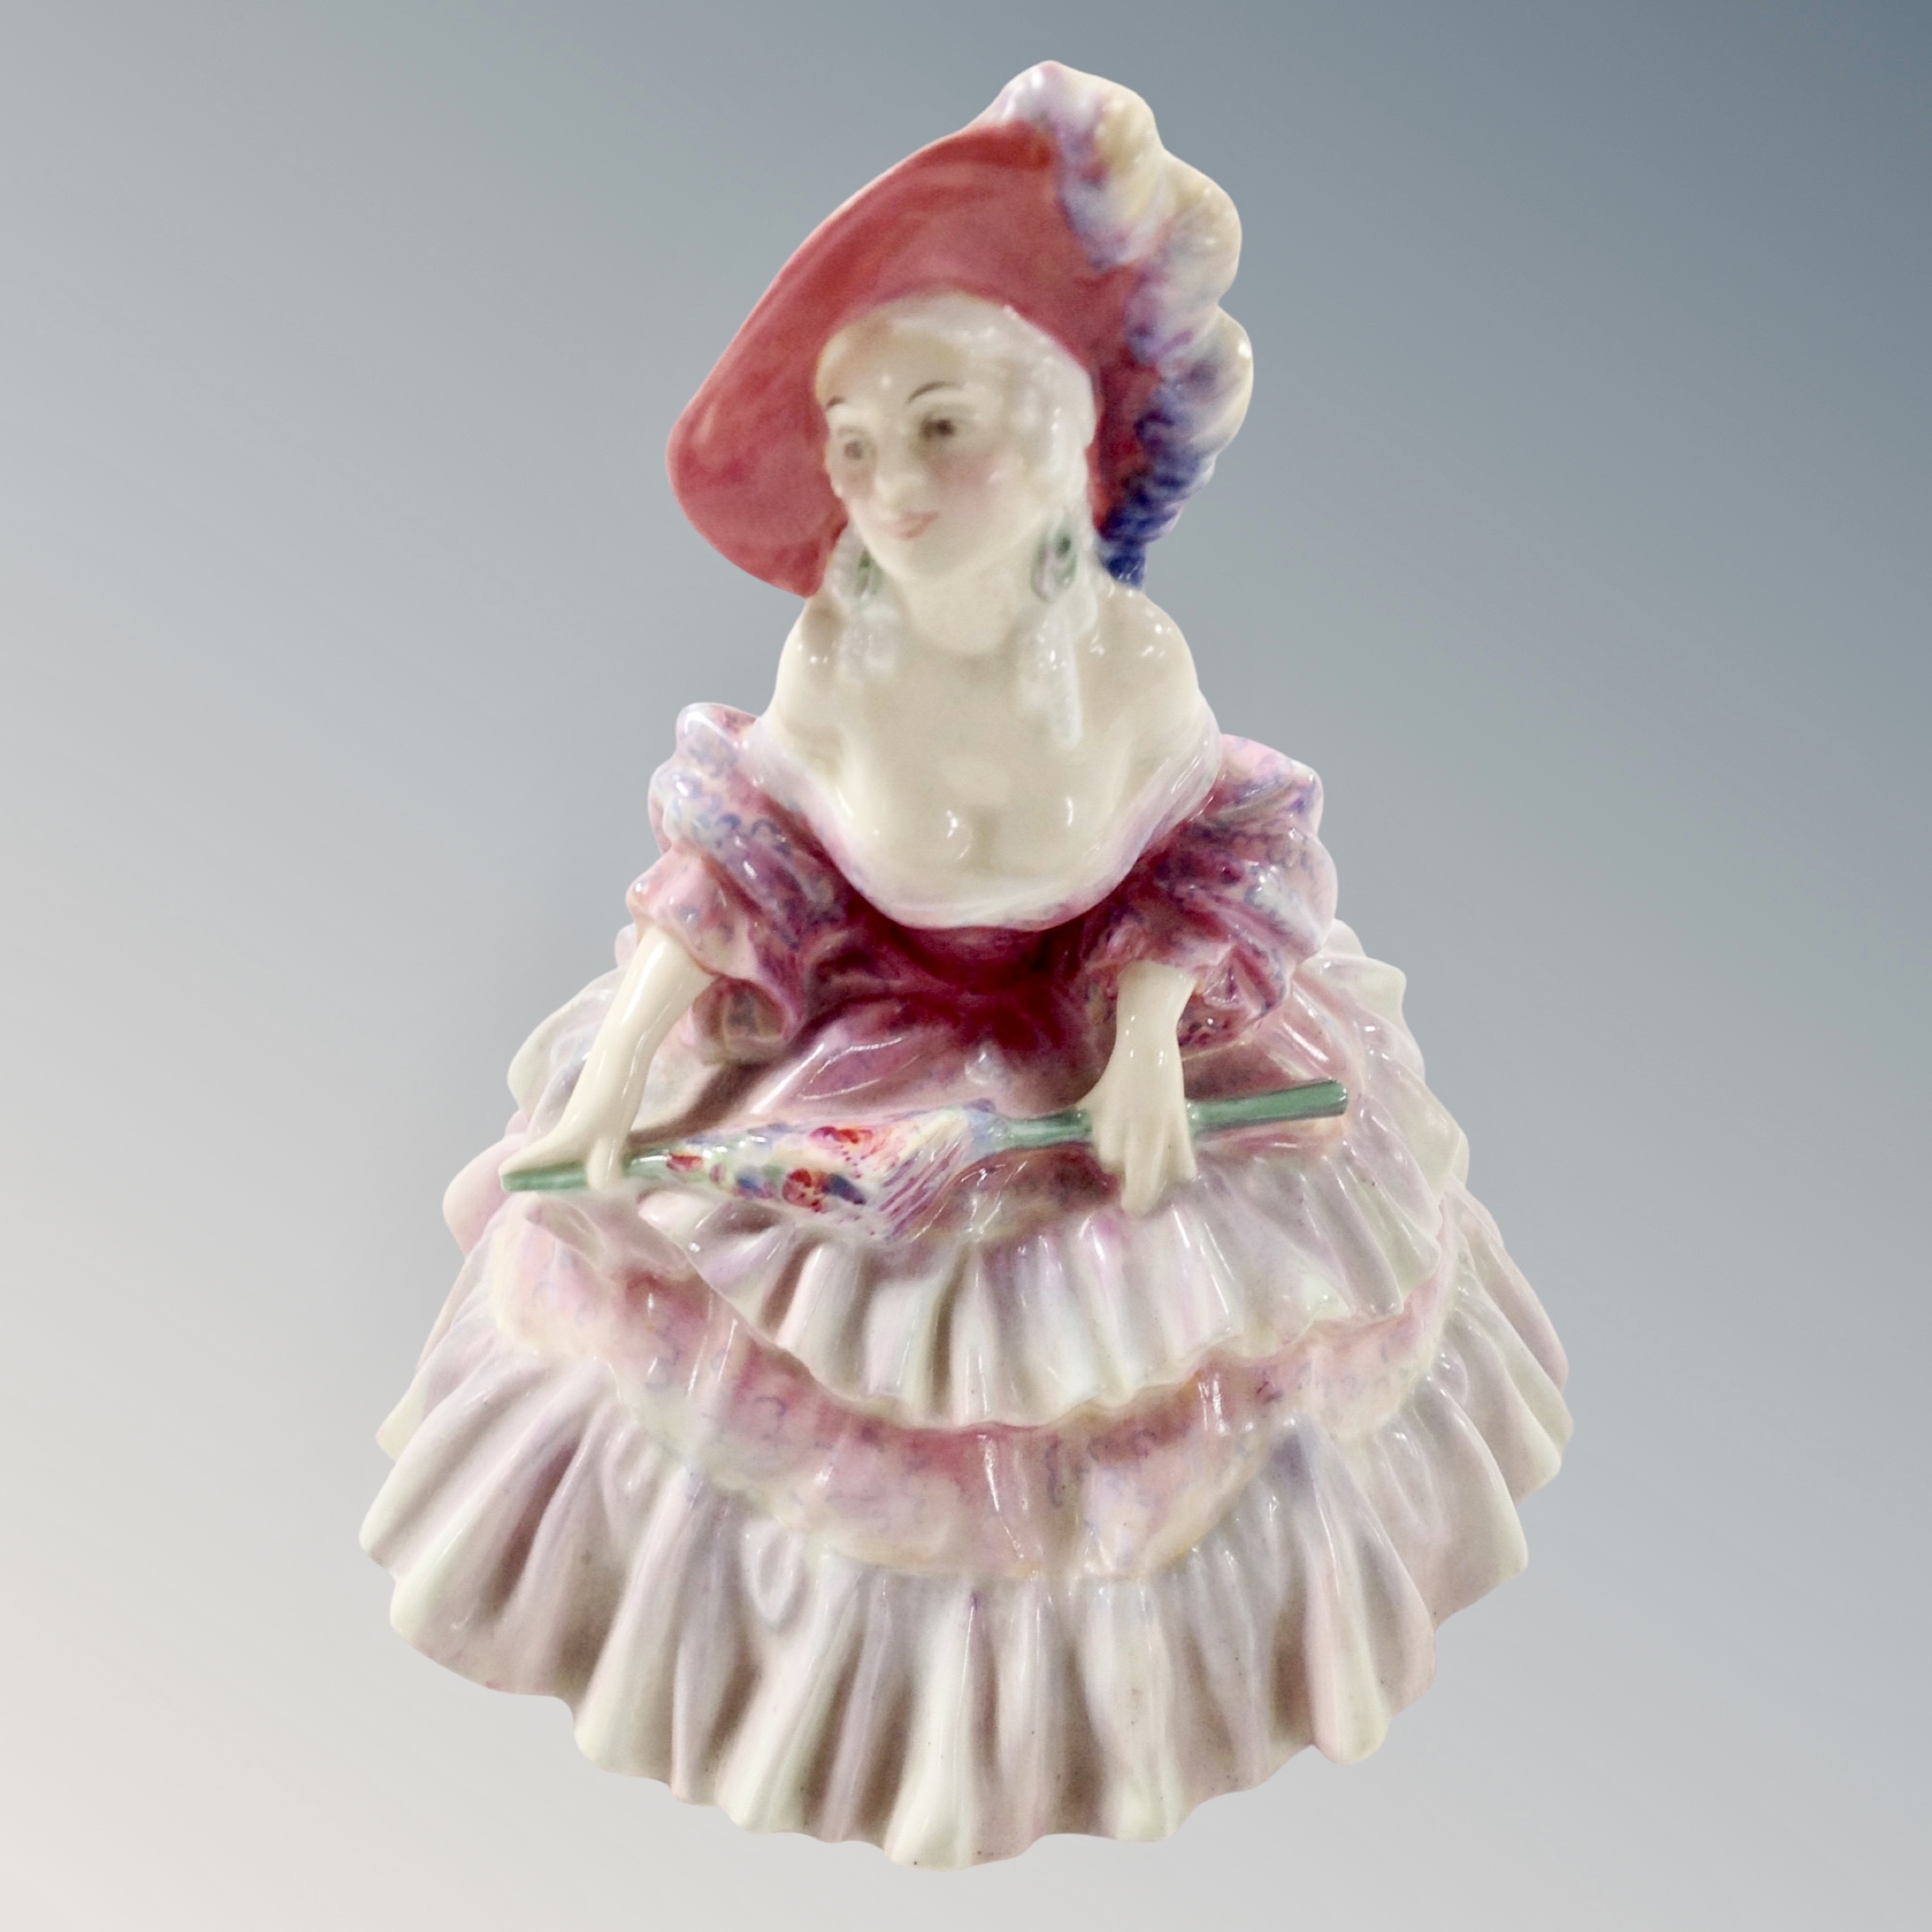 A Royal Doulton figure, Evelyn HN1622.